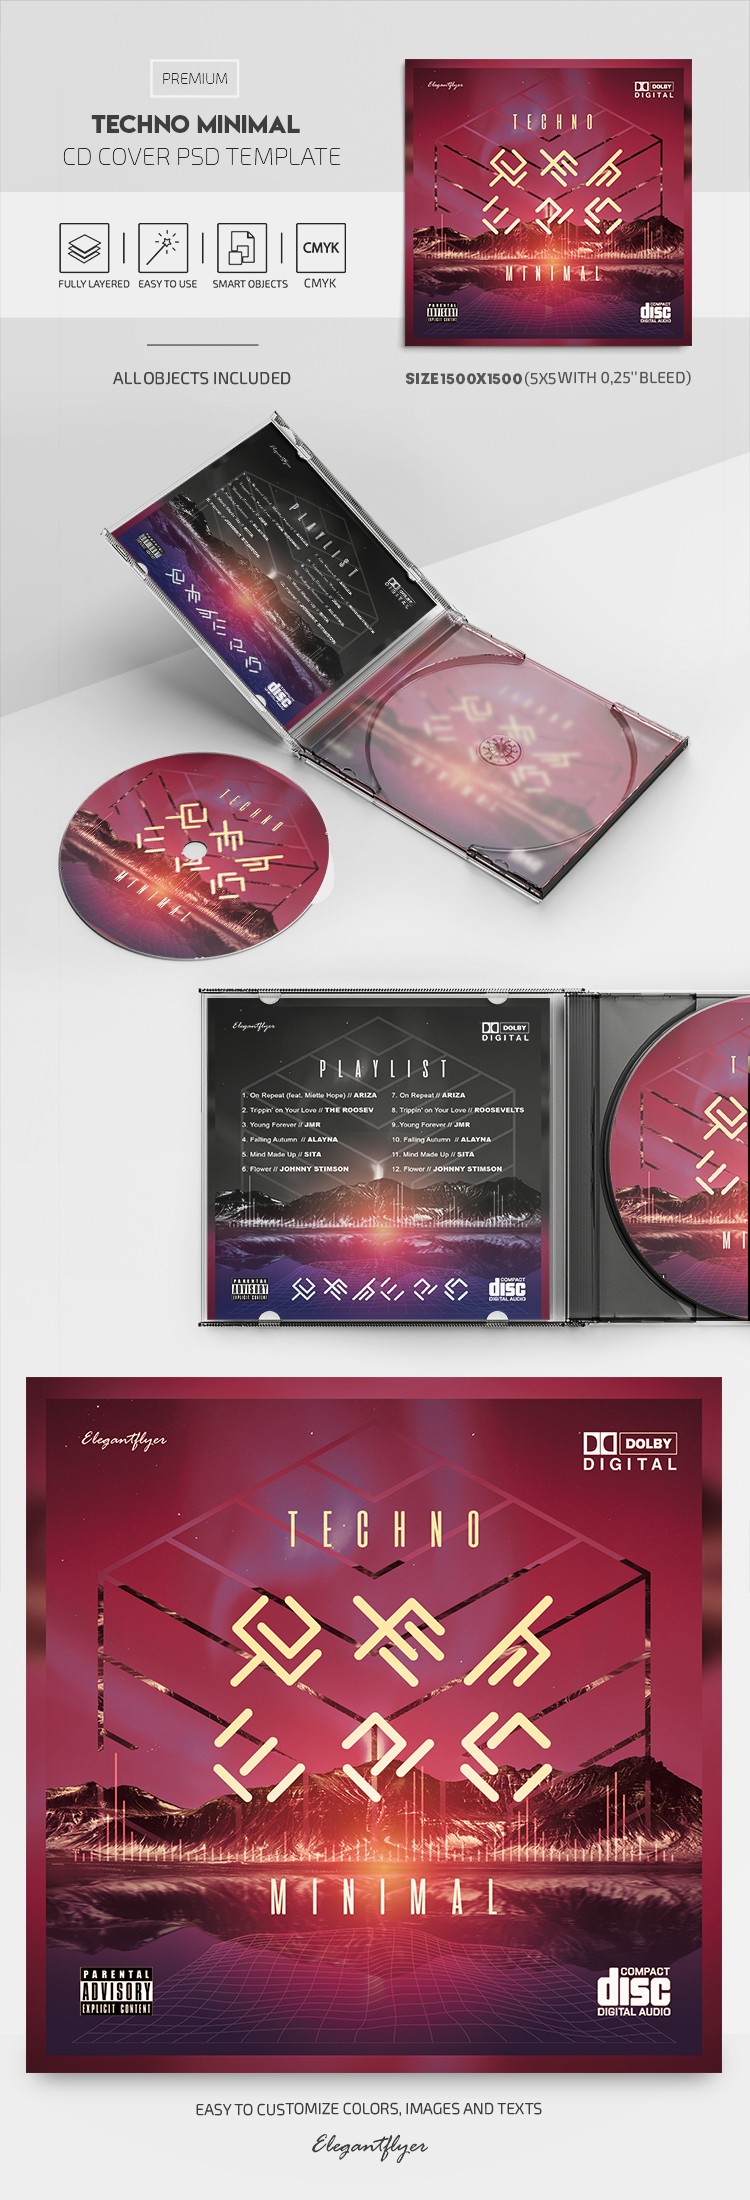 Techno Minimal CD封面 by ElegantFlyer